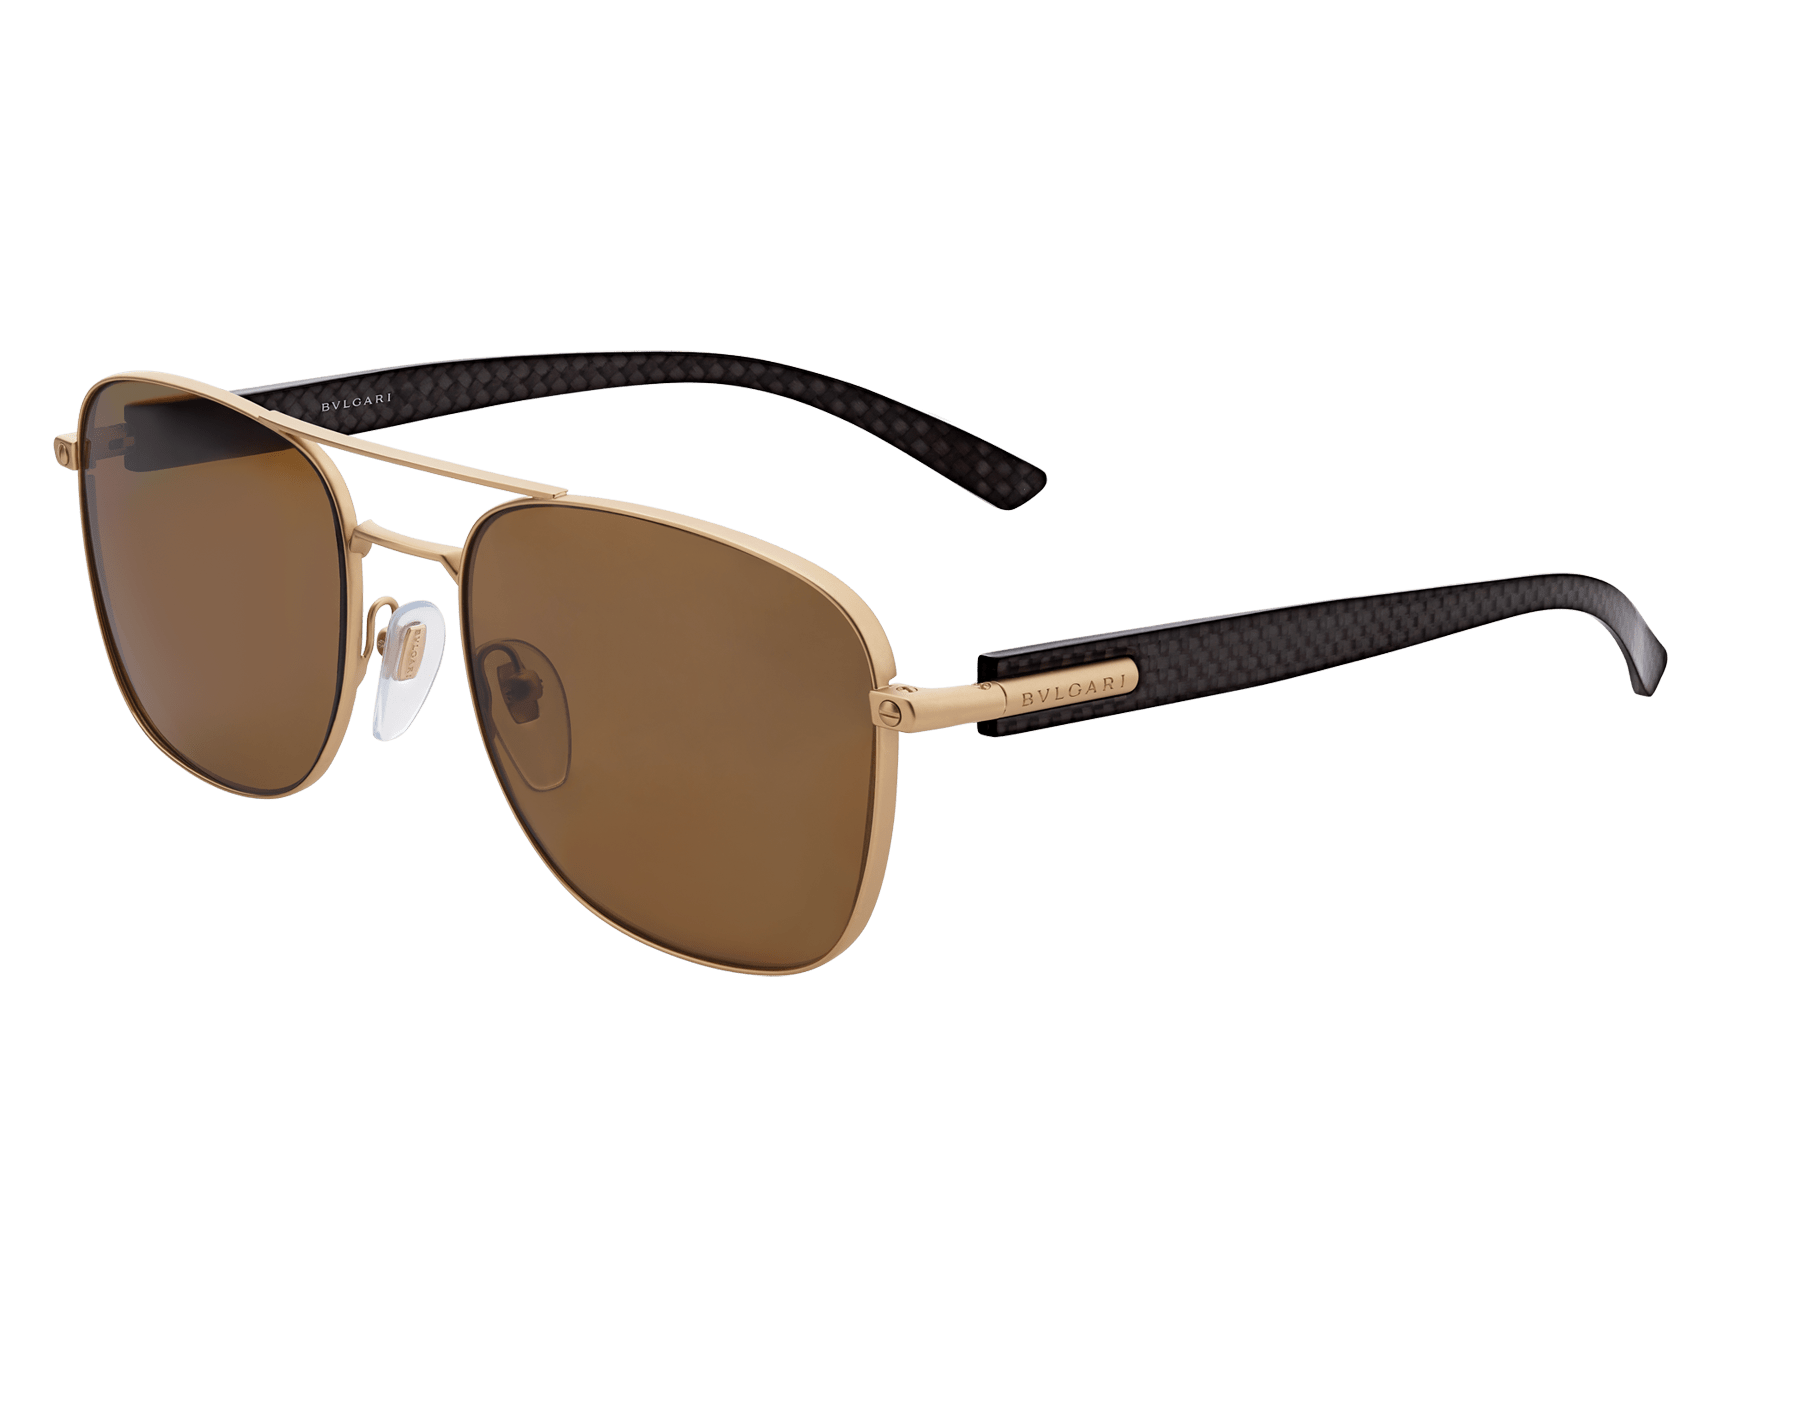 BVLGARI BVLGARI rectangular metal sunglasses with metal double bridge and carbon fibre arms. 903916 image 1